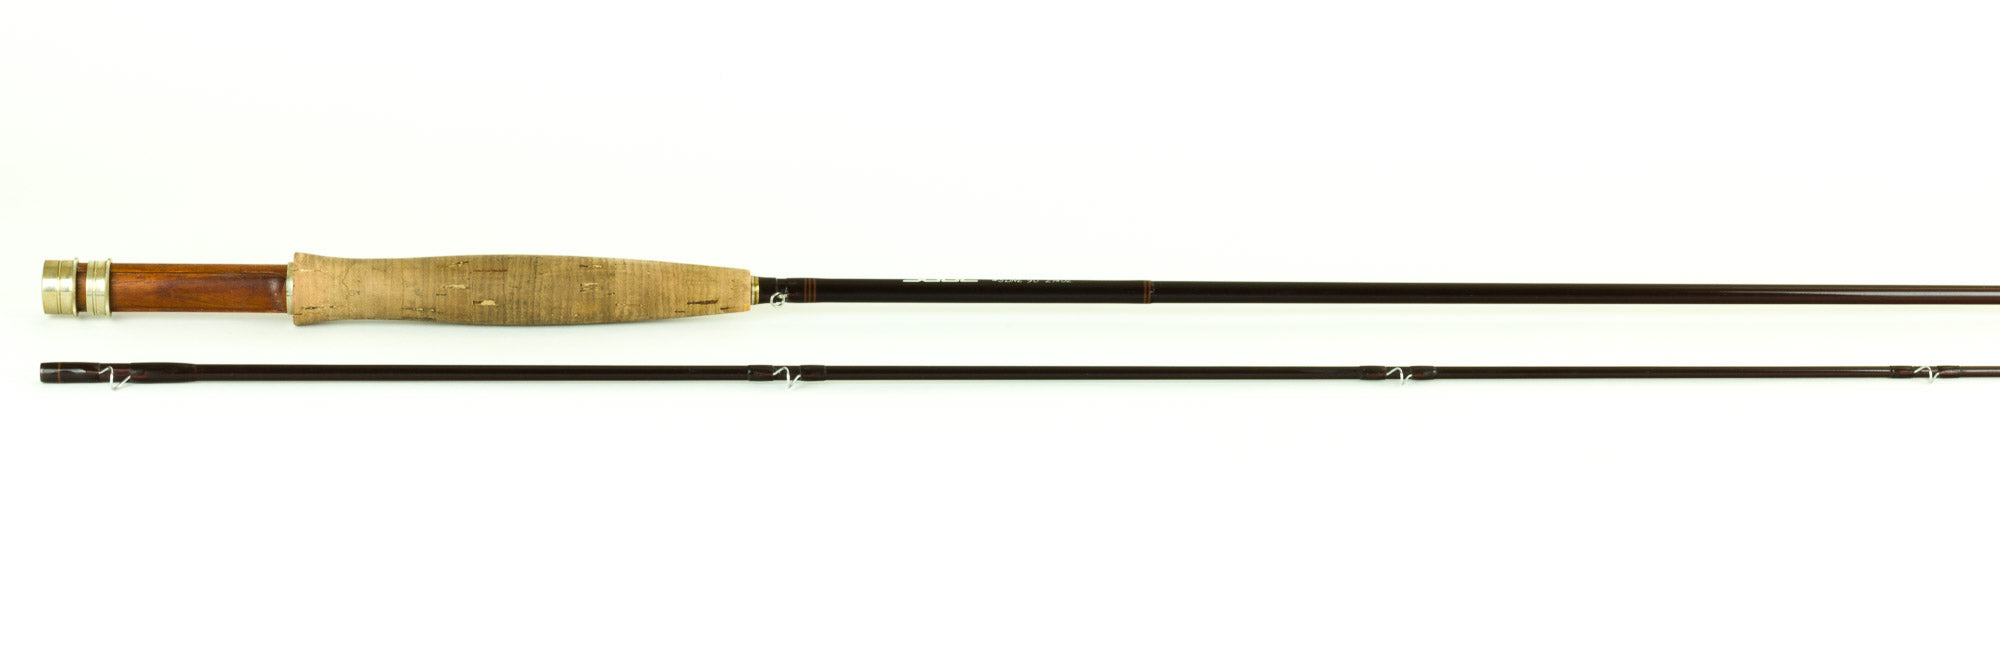 USED Fly Fishing Rod- Sage Graphite II 9’ 6wt 2 piece